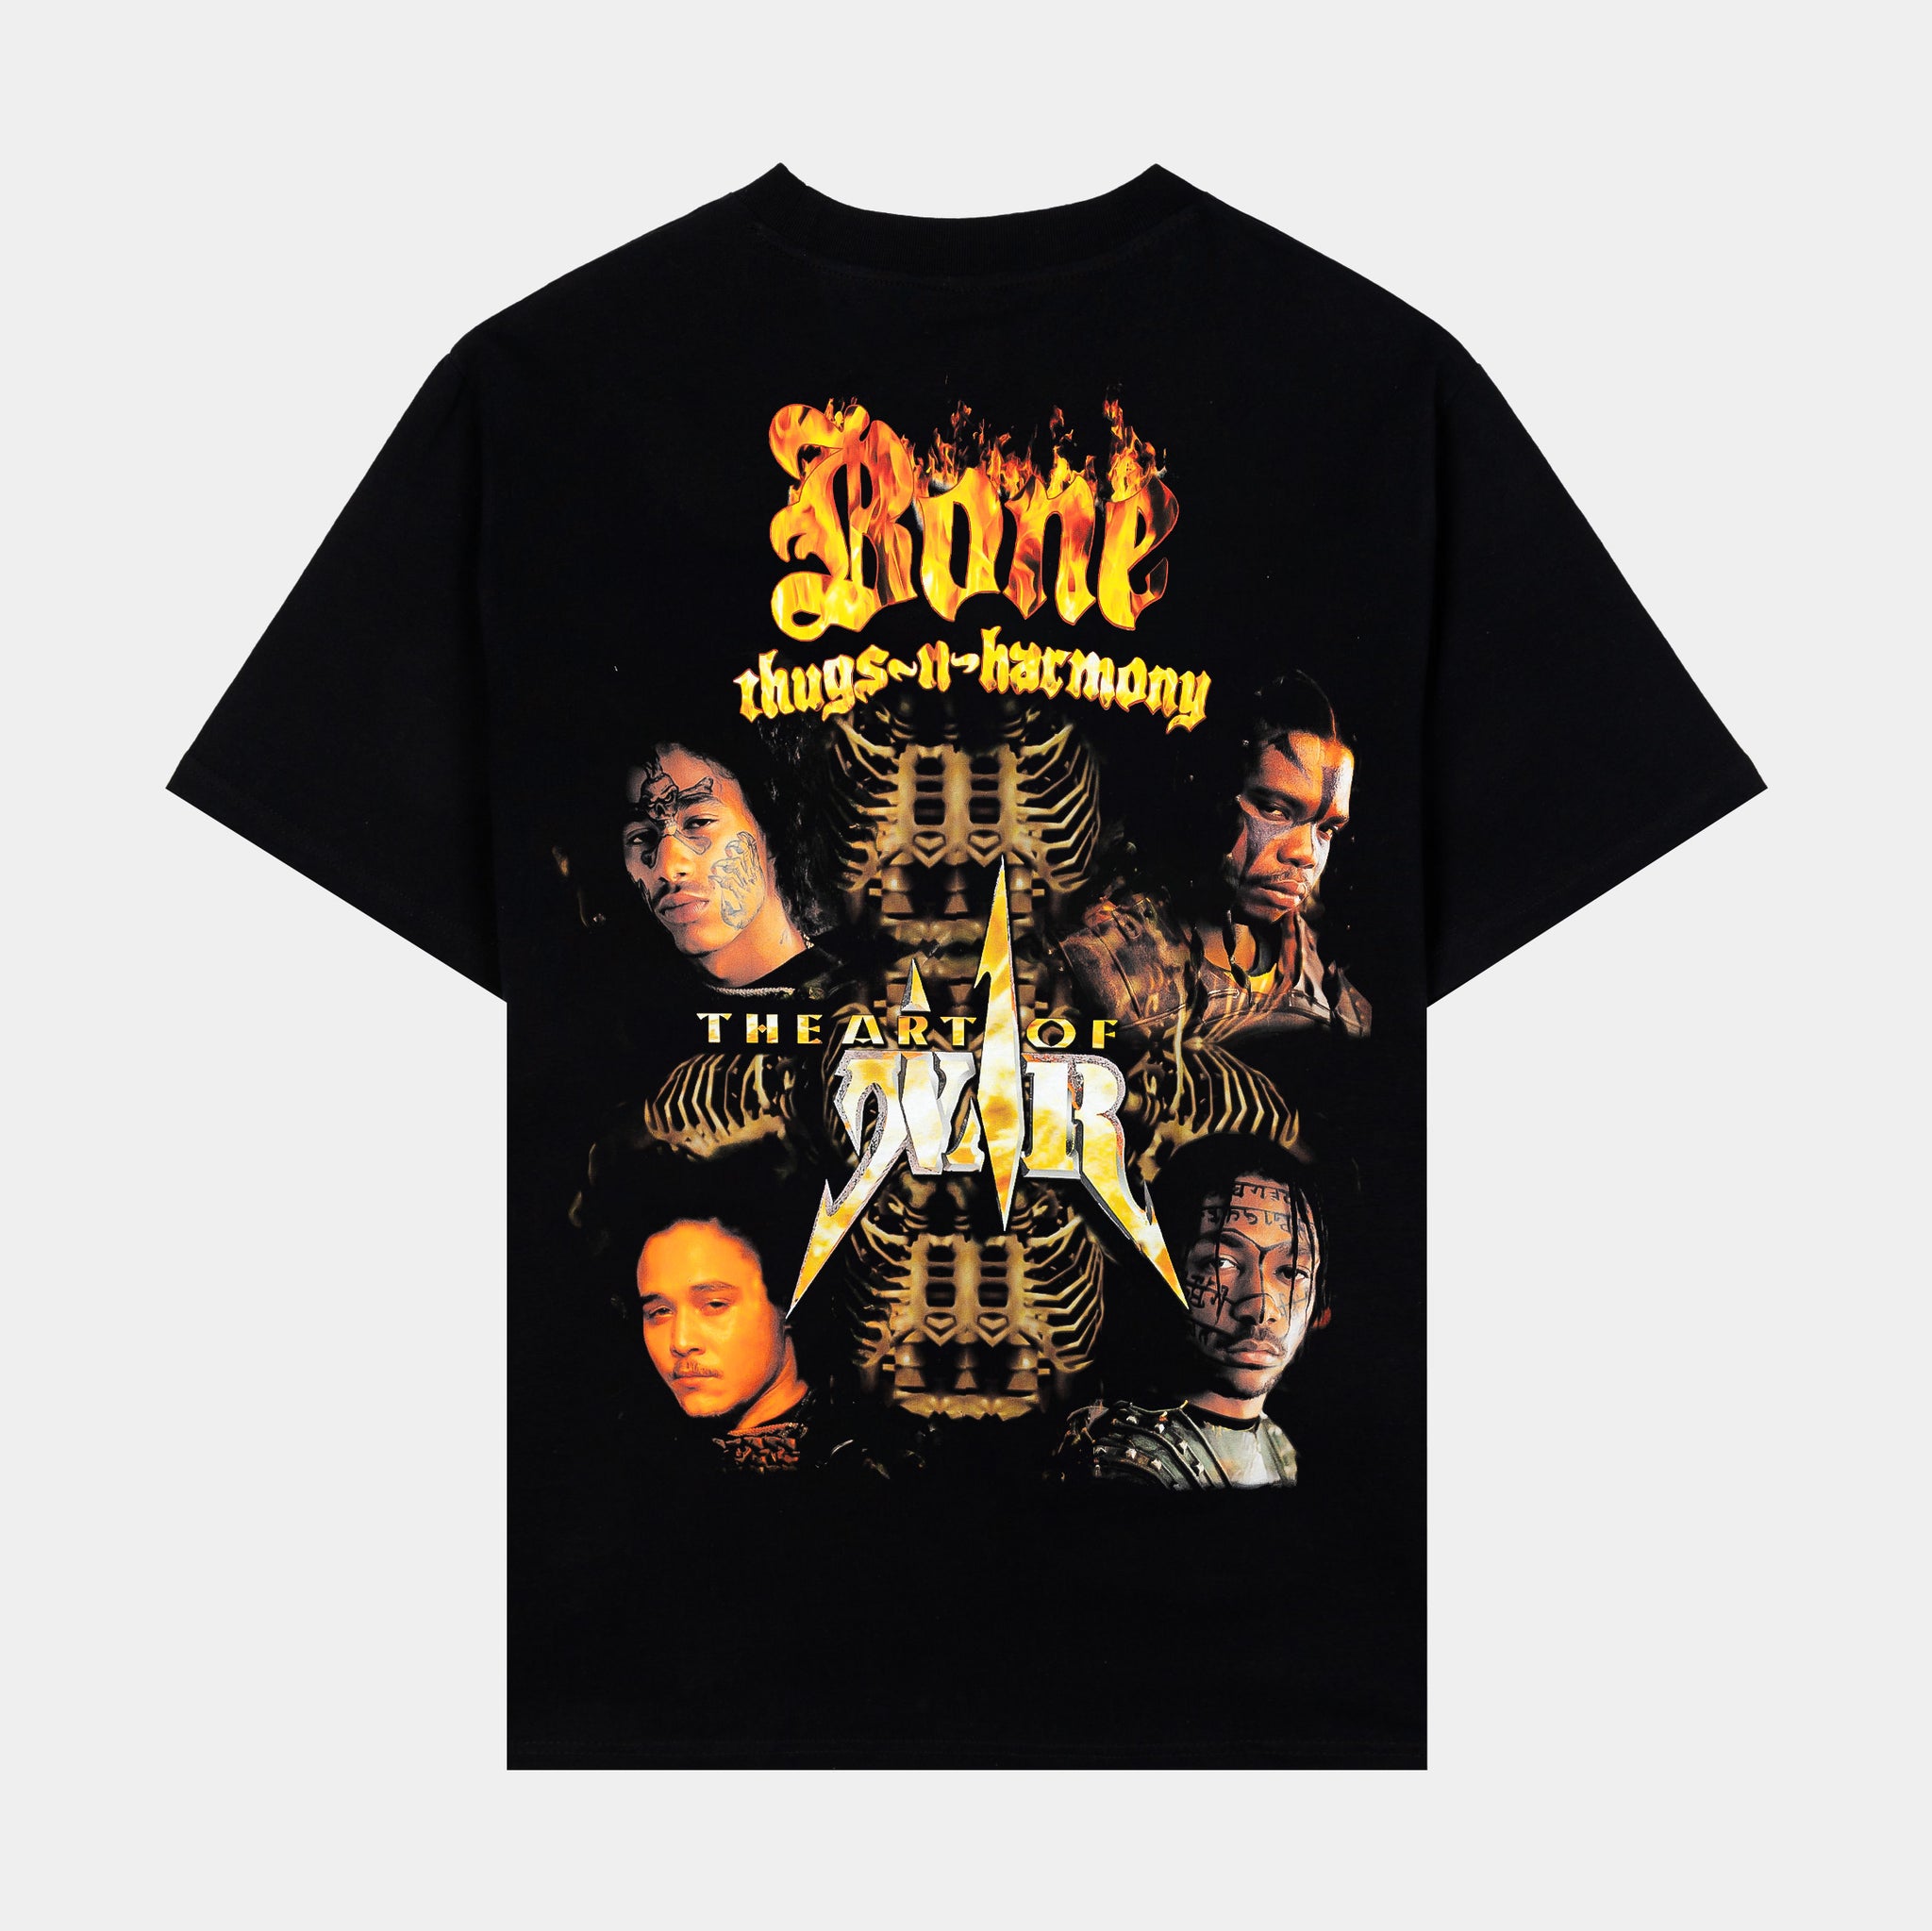 SP x Bone Thugs N Harmony Art Of War Mens Short Sleeve Shirt (Black/Brown)